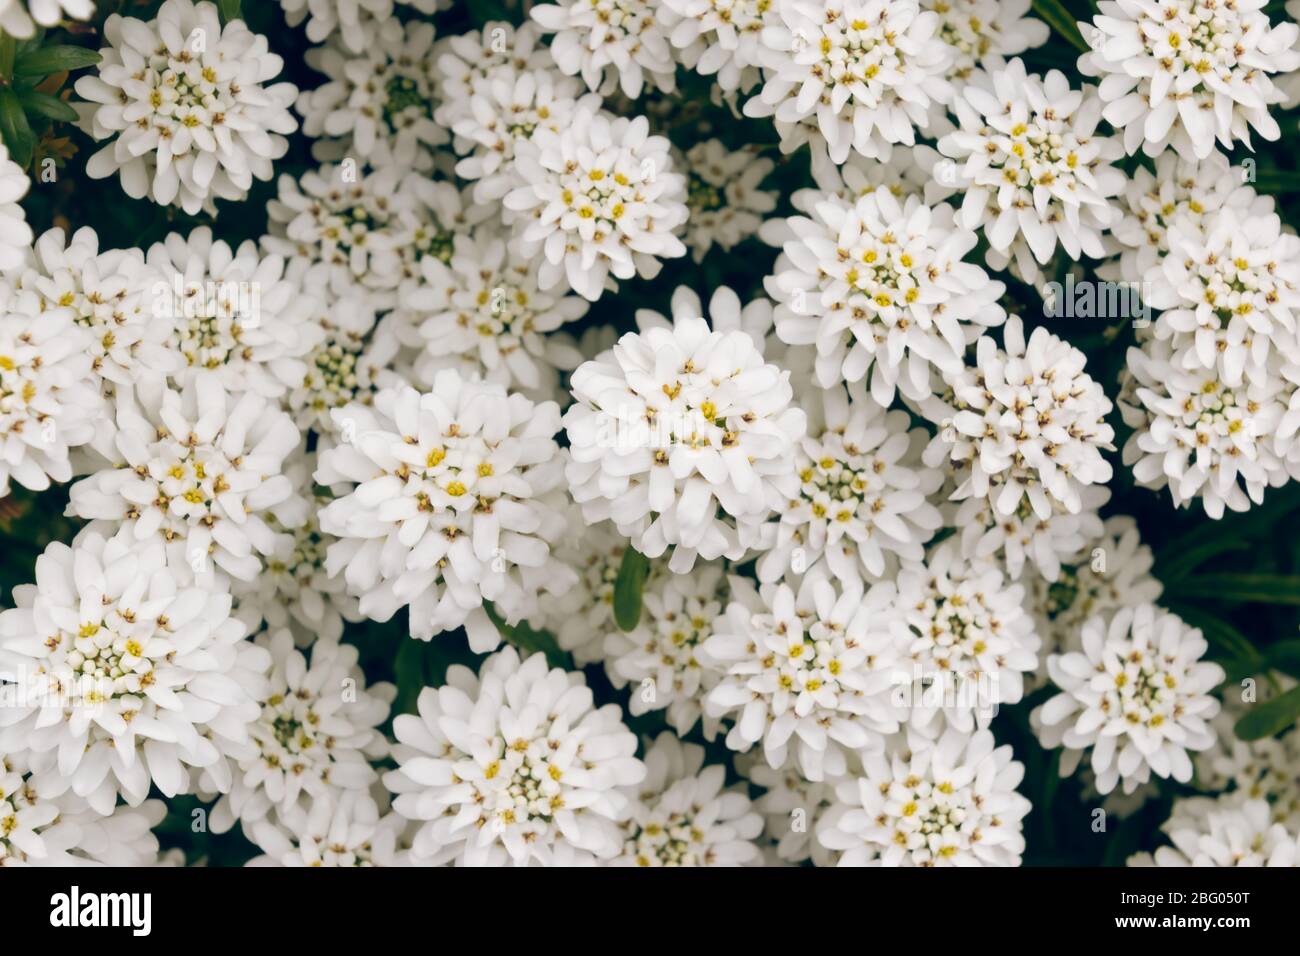 Spring white Iberis flowers. Iberis sempervirens white flowering plant evergreen candytuft or perennial candytuft. Stock Photo